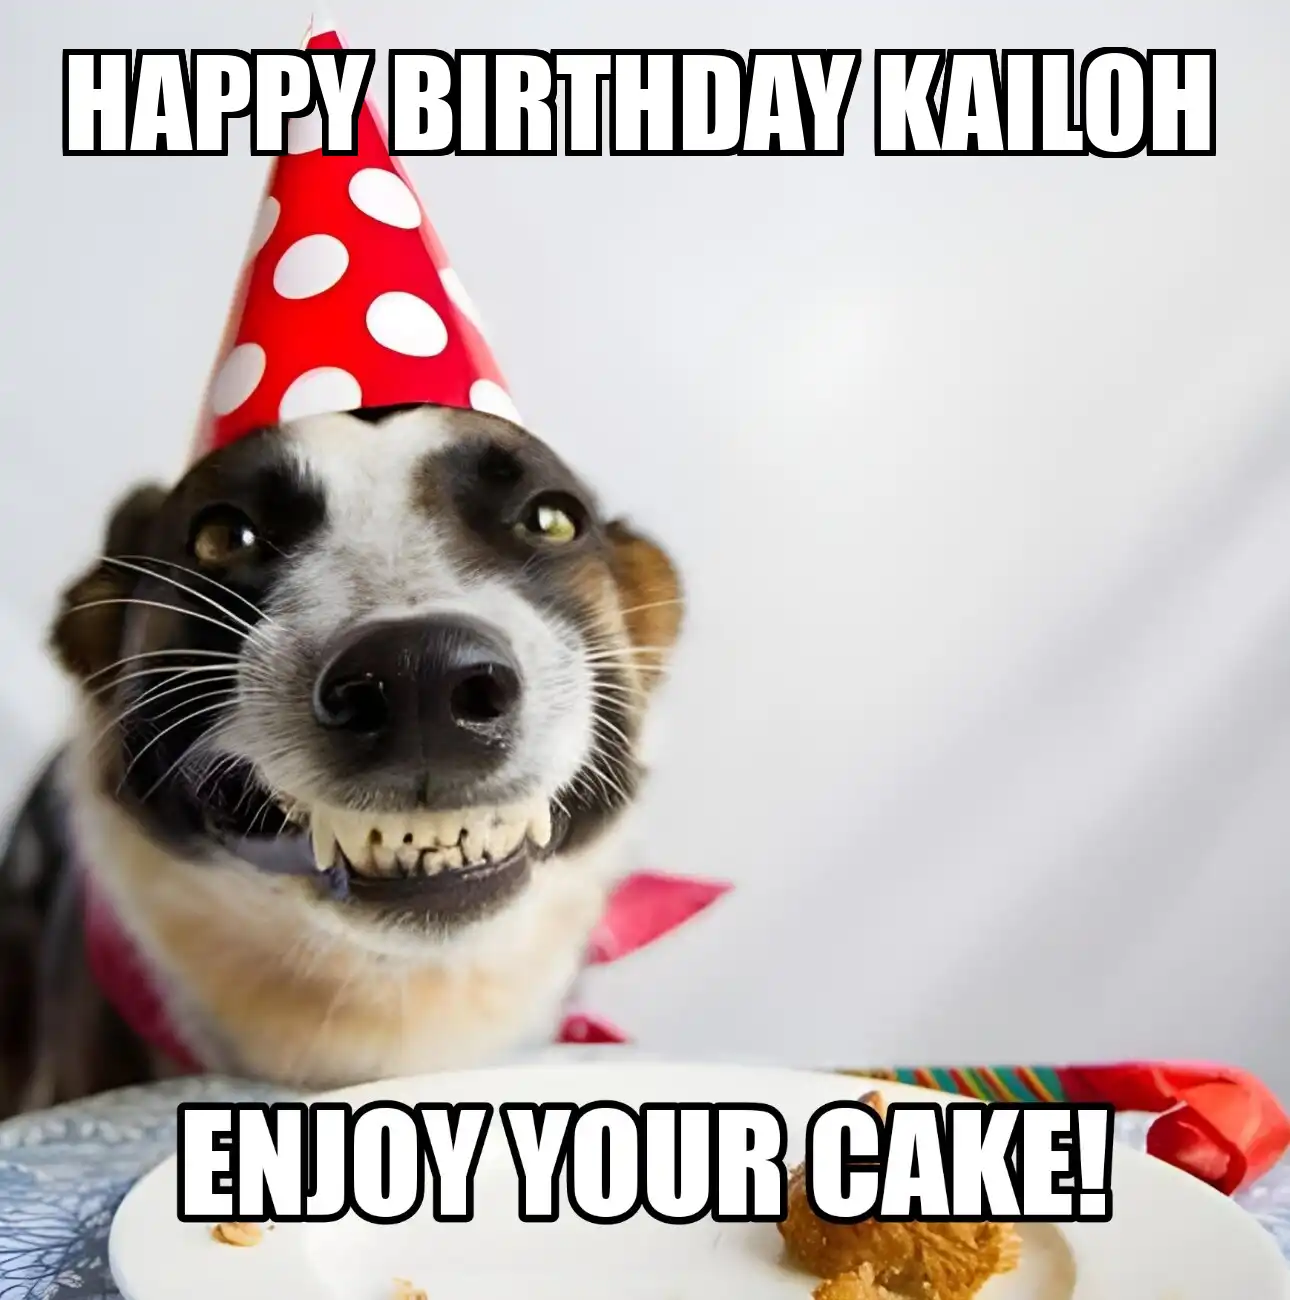 Happy Birthday Kailoh Enjoy Your Cake Dog Meme